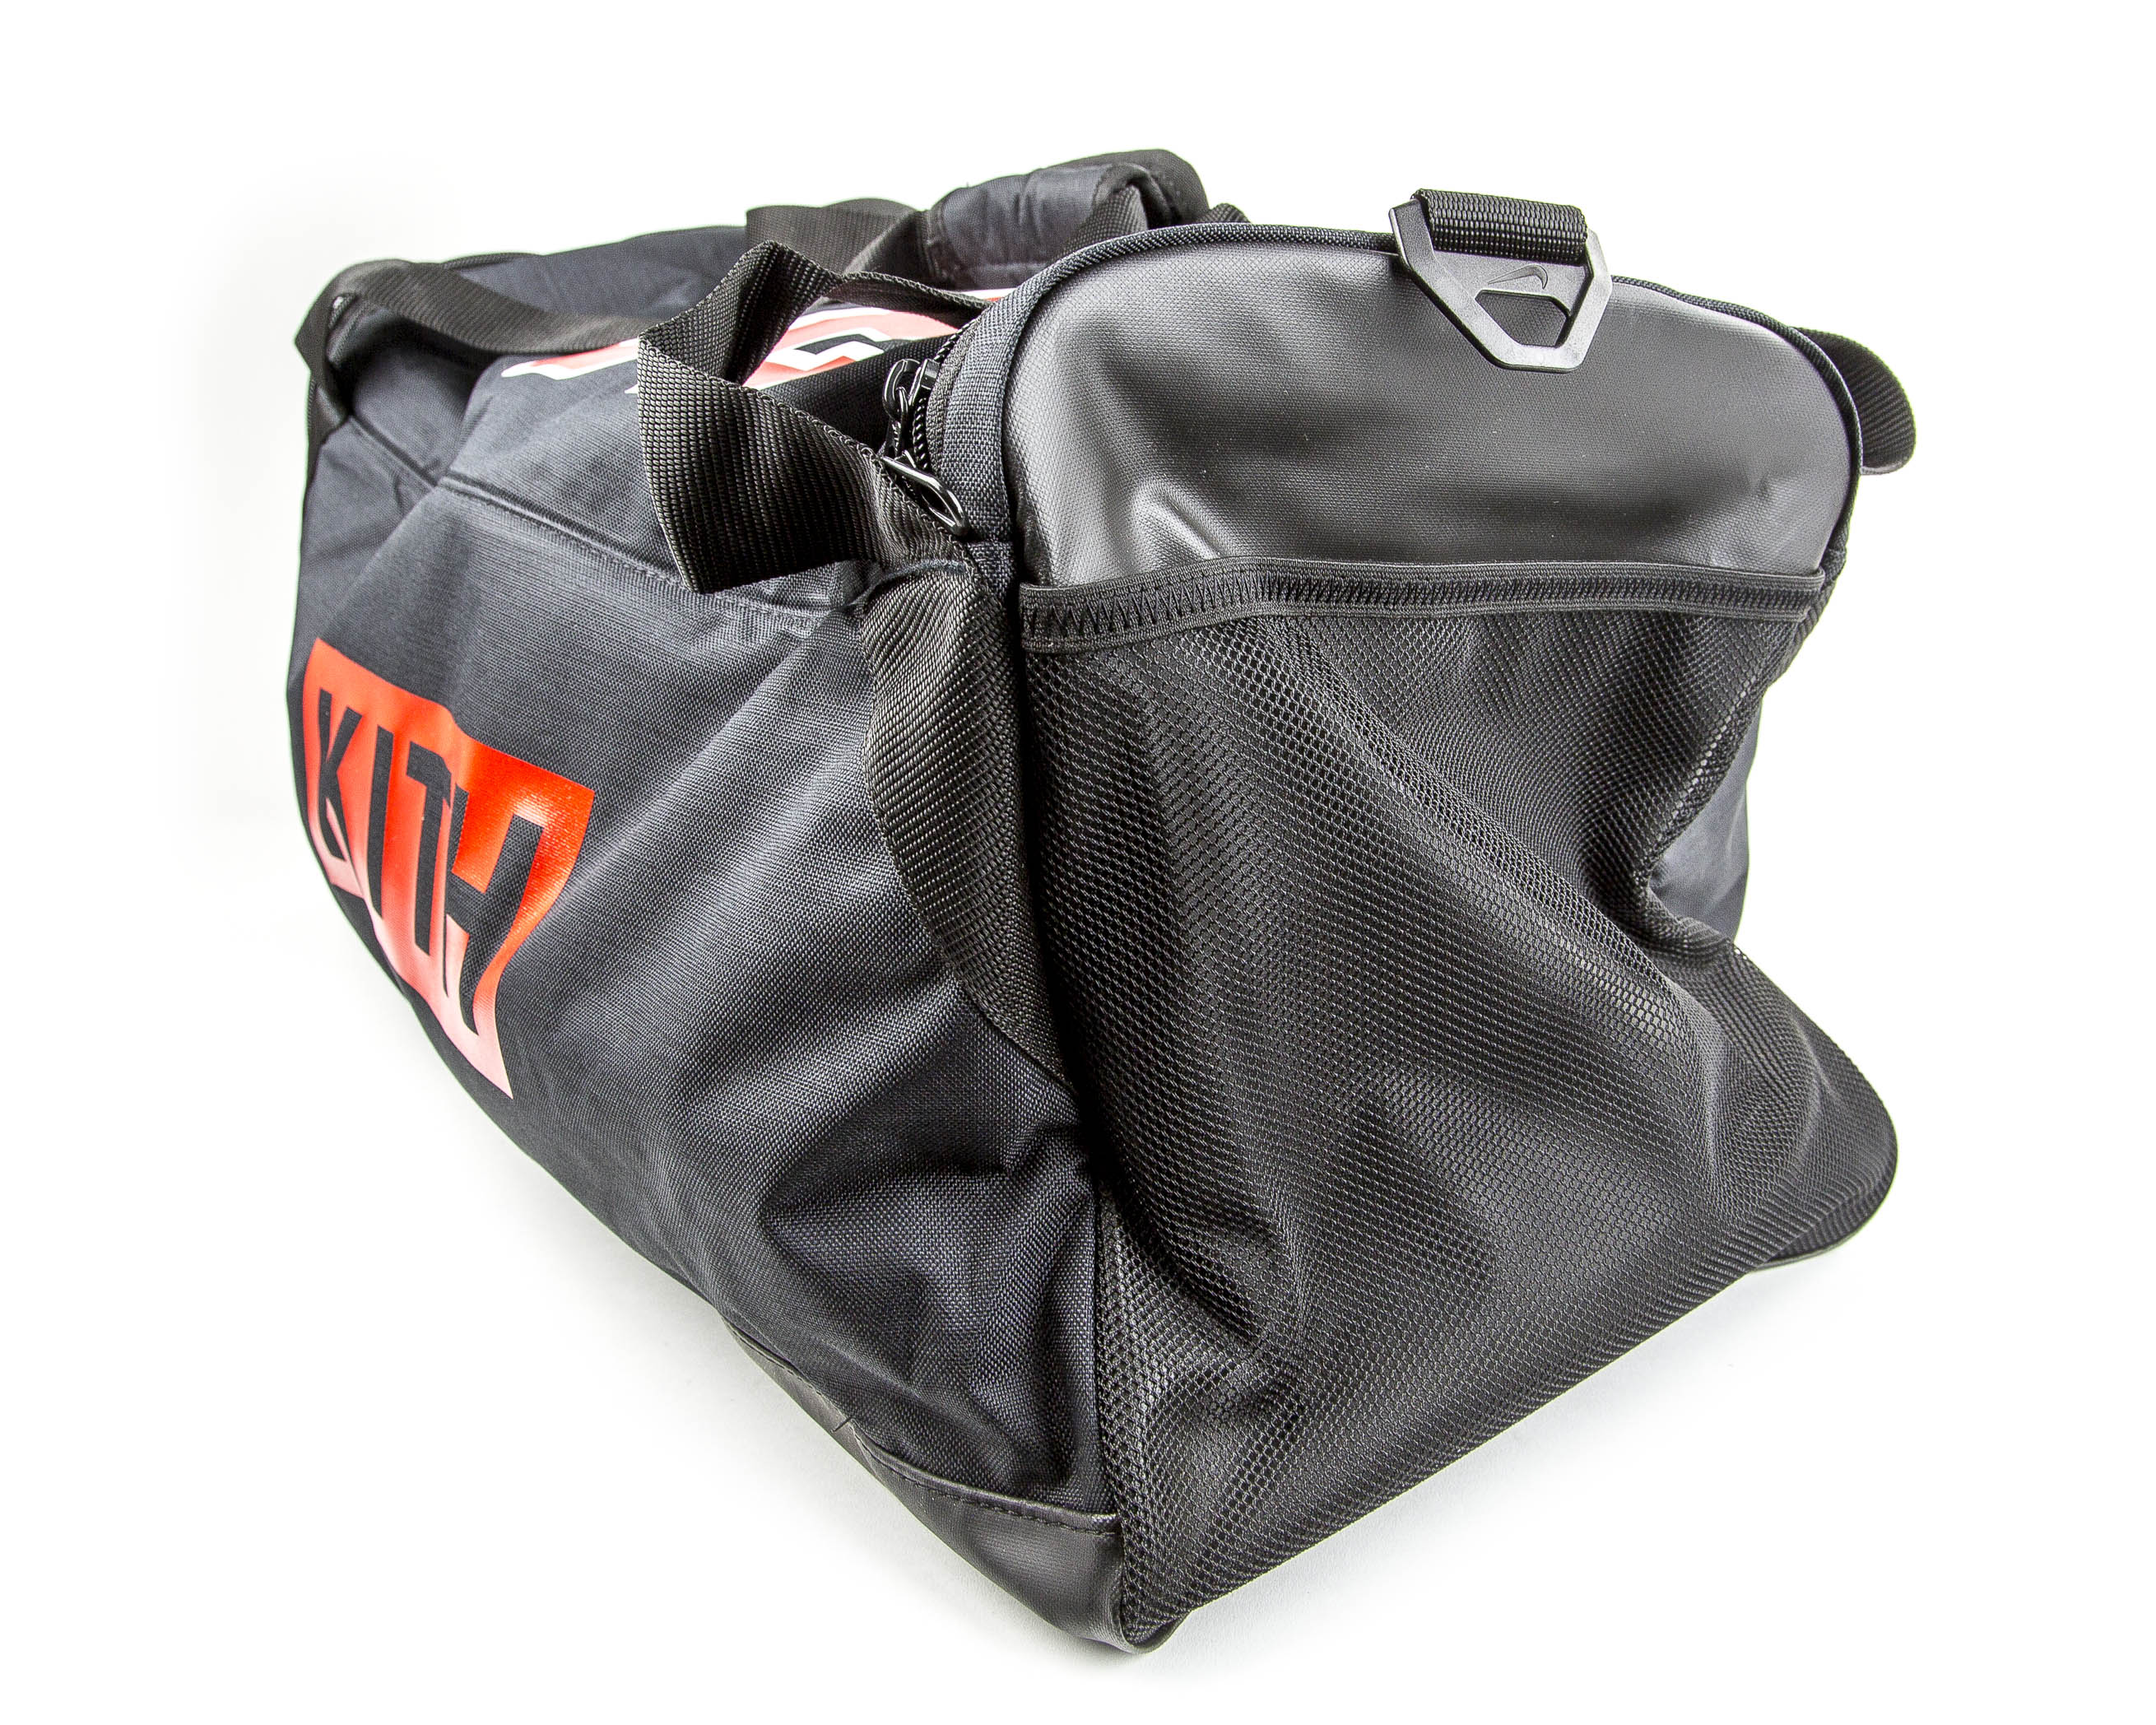 KITH x Nike Brasilia Medium Duffel Bag, Black/Anthracite – ASA College: Florida